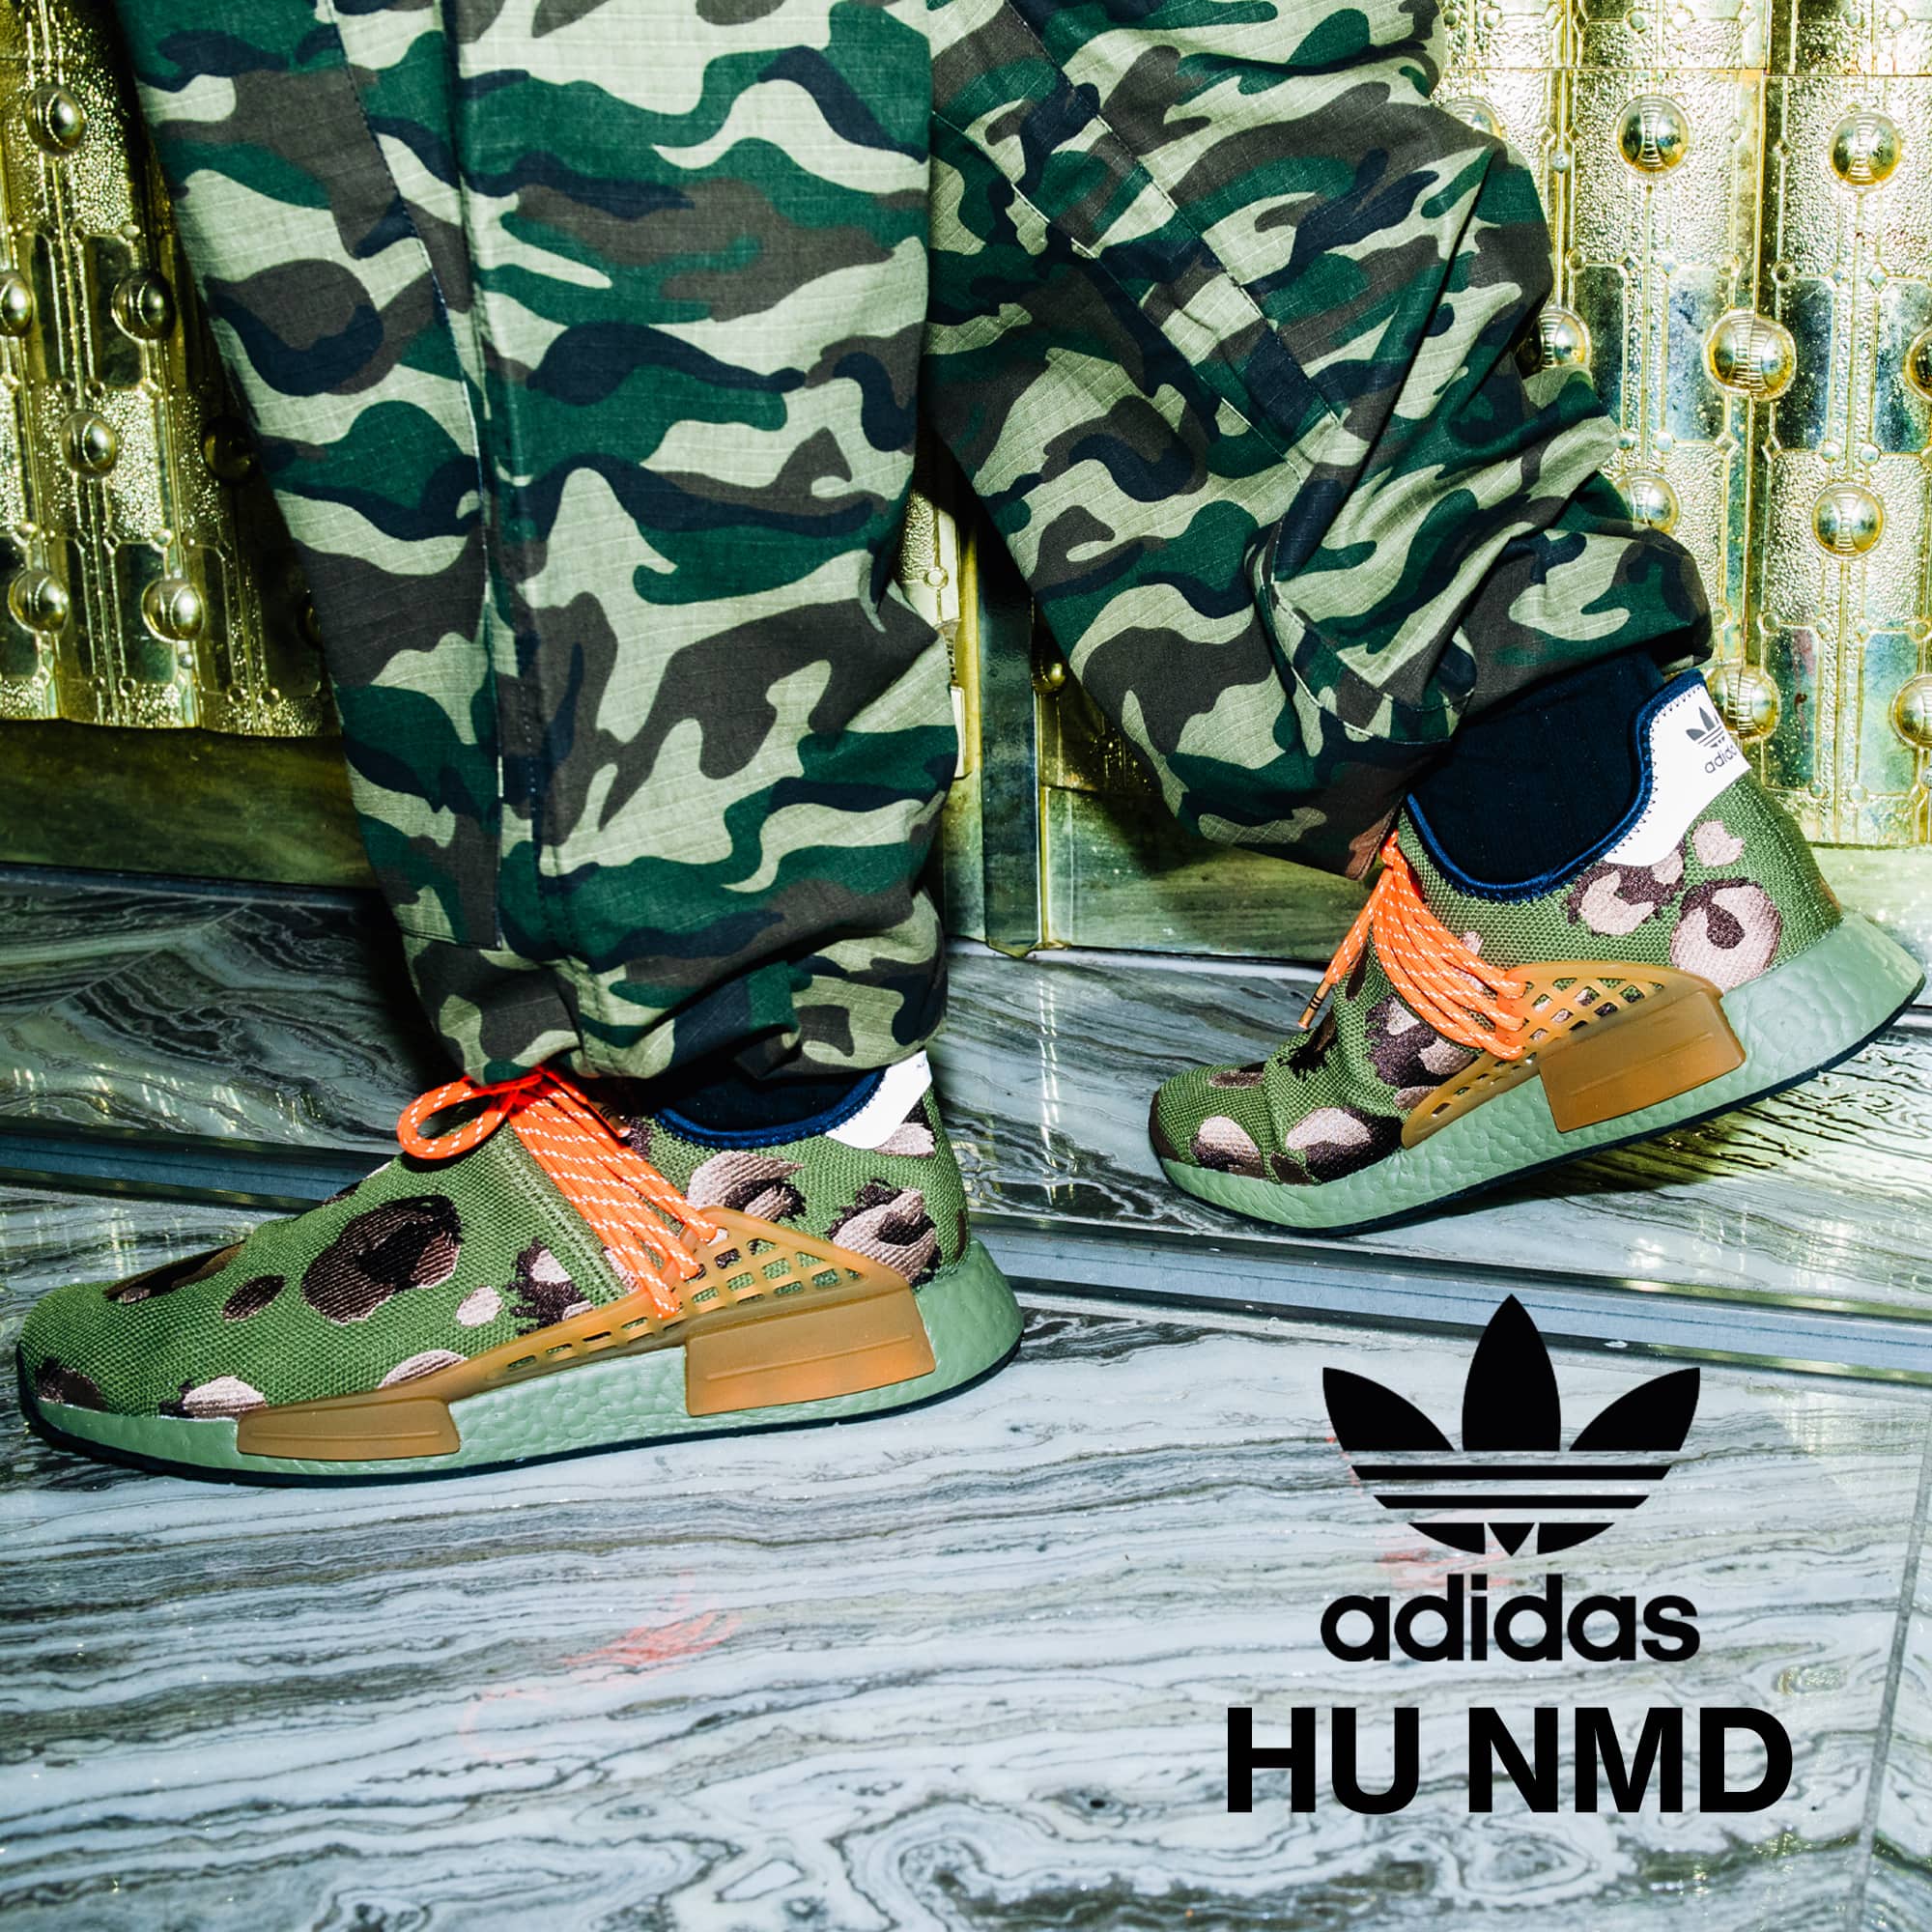 adidas Originals HU NMD -atmos LIMITED-